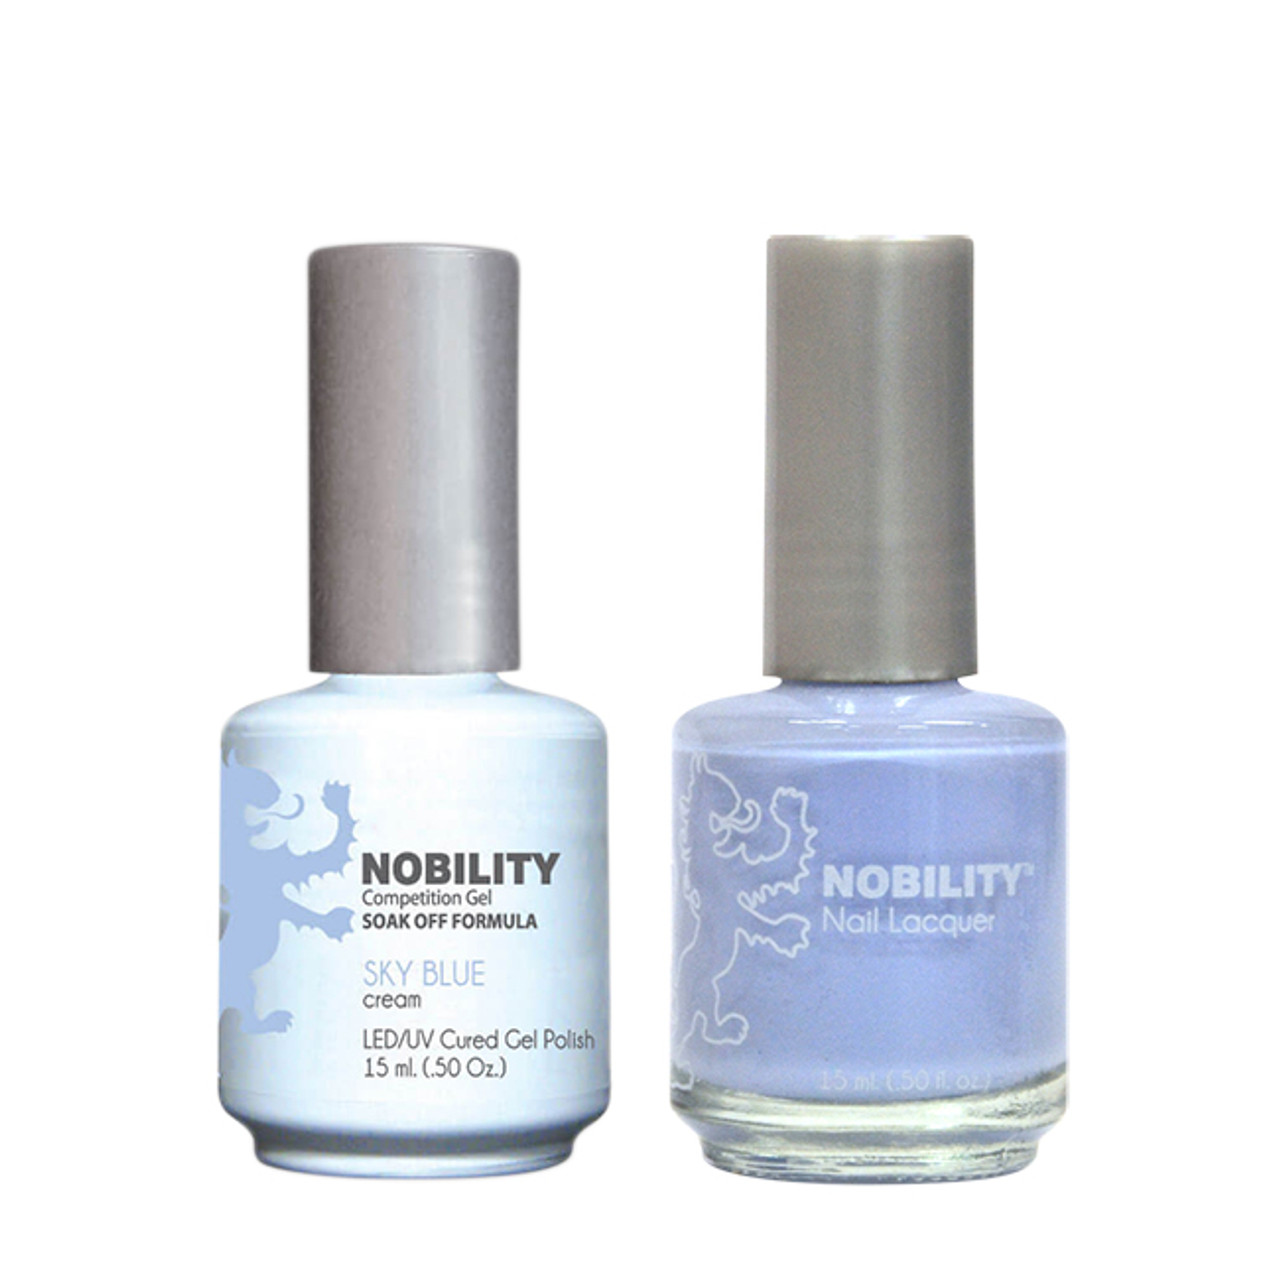 LeChat Nobility Gel Polish & Nail Lacquer Duo Set Sky Blue - .5 oz / 15 ml